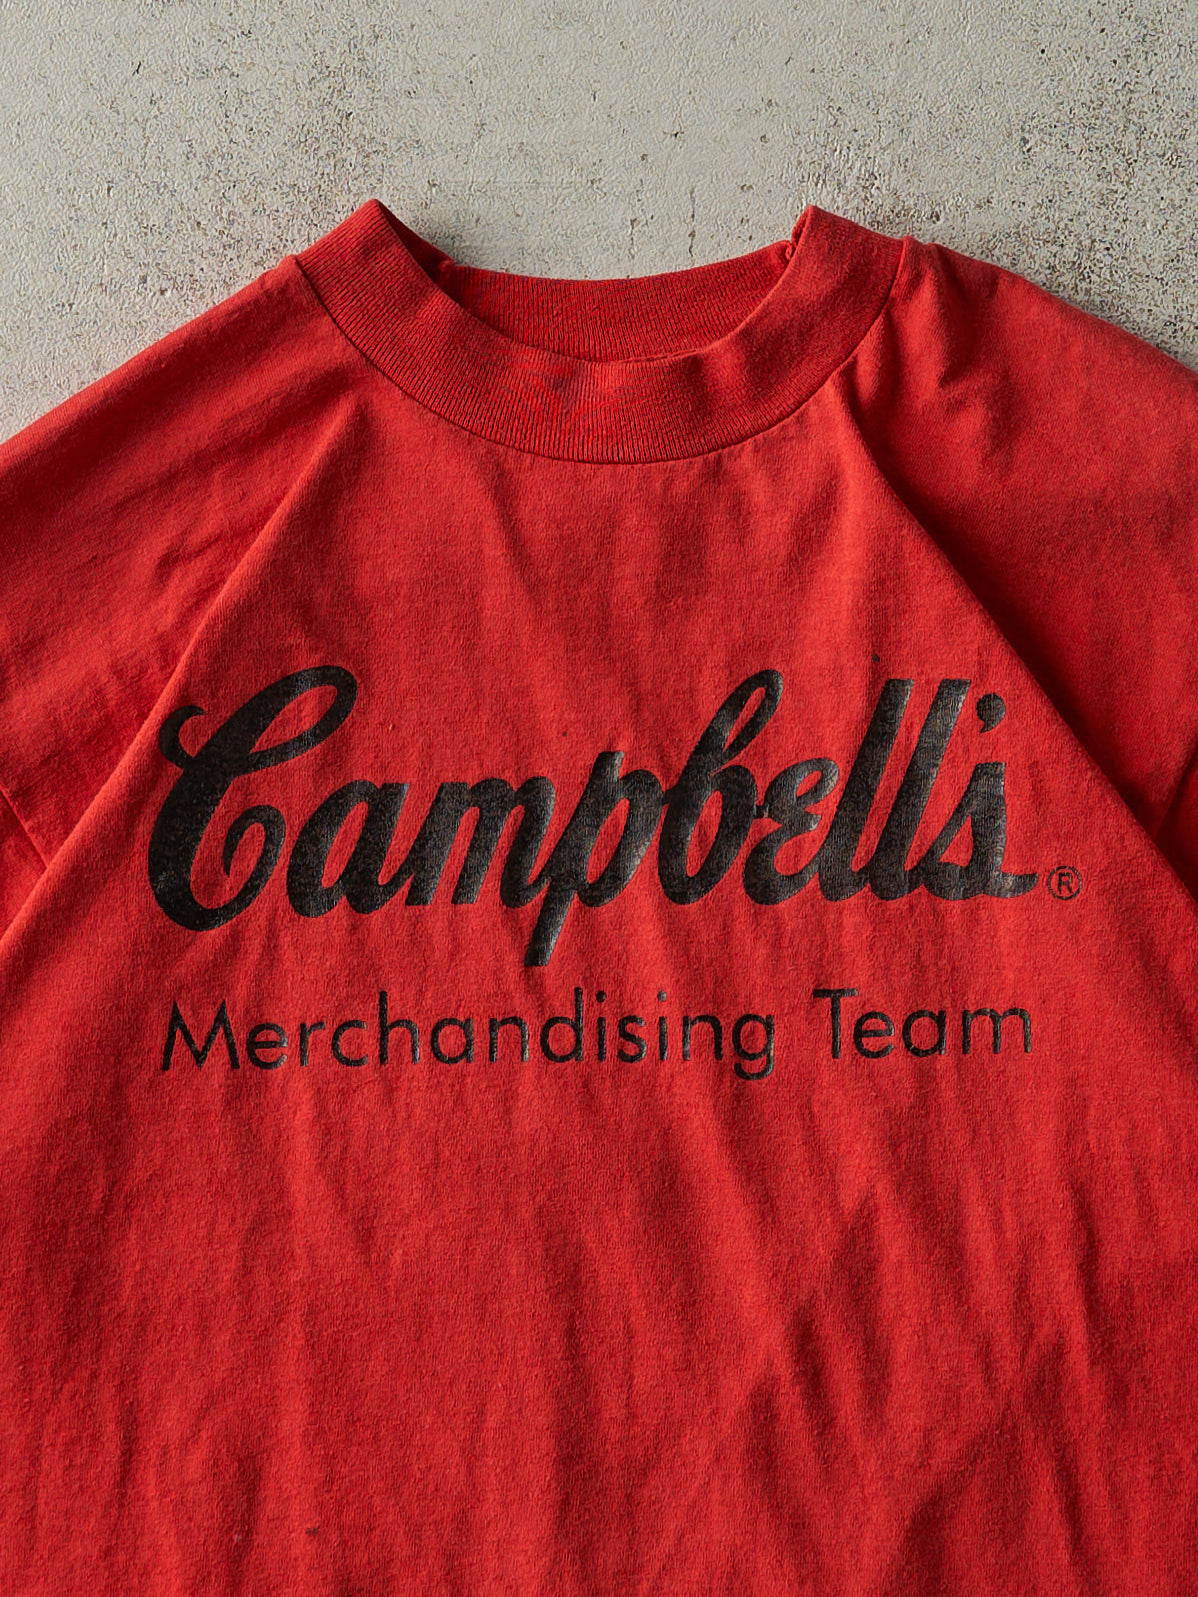 Vintage 80s Red Campbells Merchandising Team Single Stitch Tee (M)